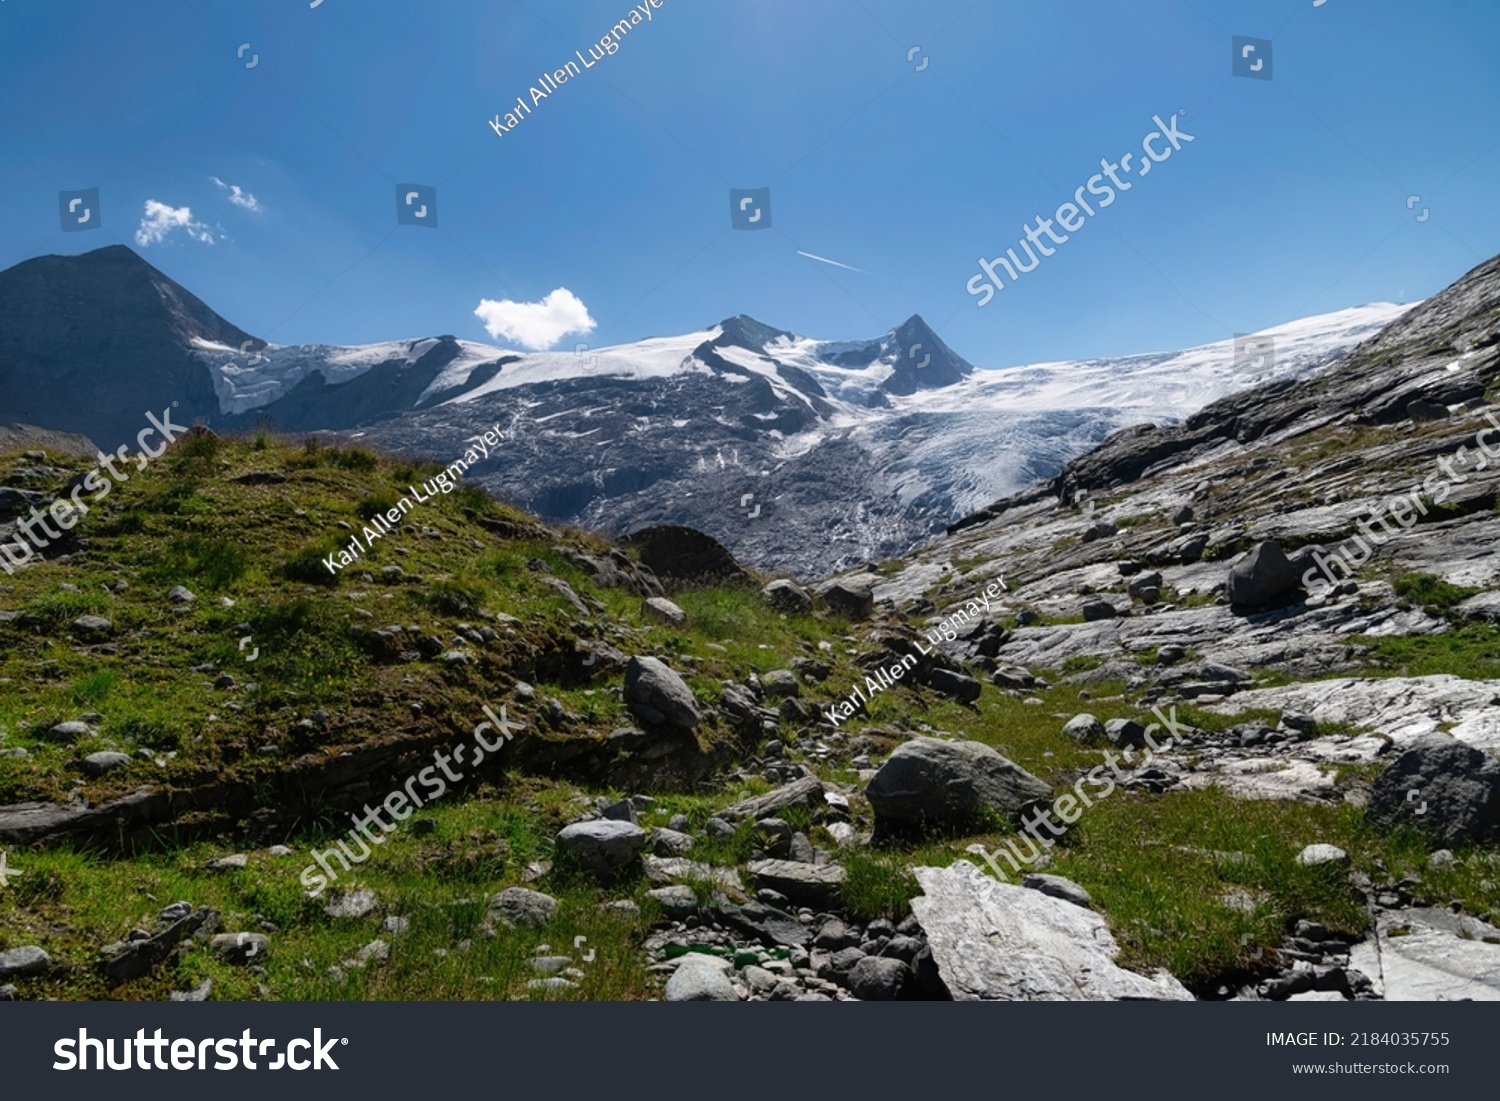 Grossvenediger, Hohe Tauern National Park, Alps, Tyrol, Austria #2184035755